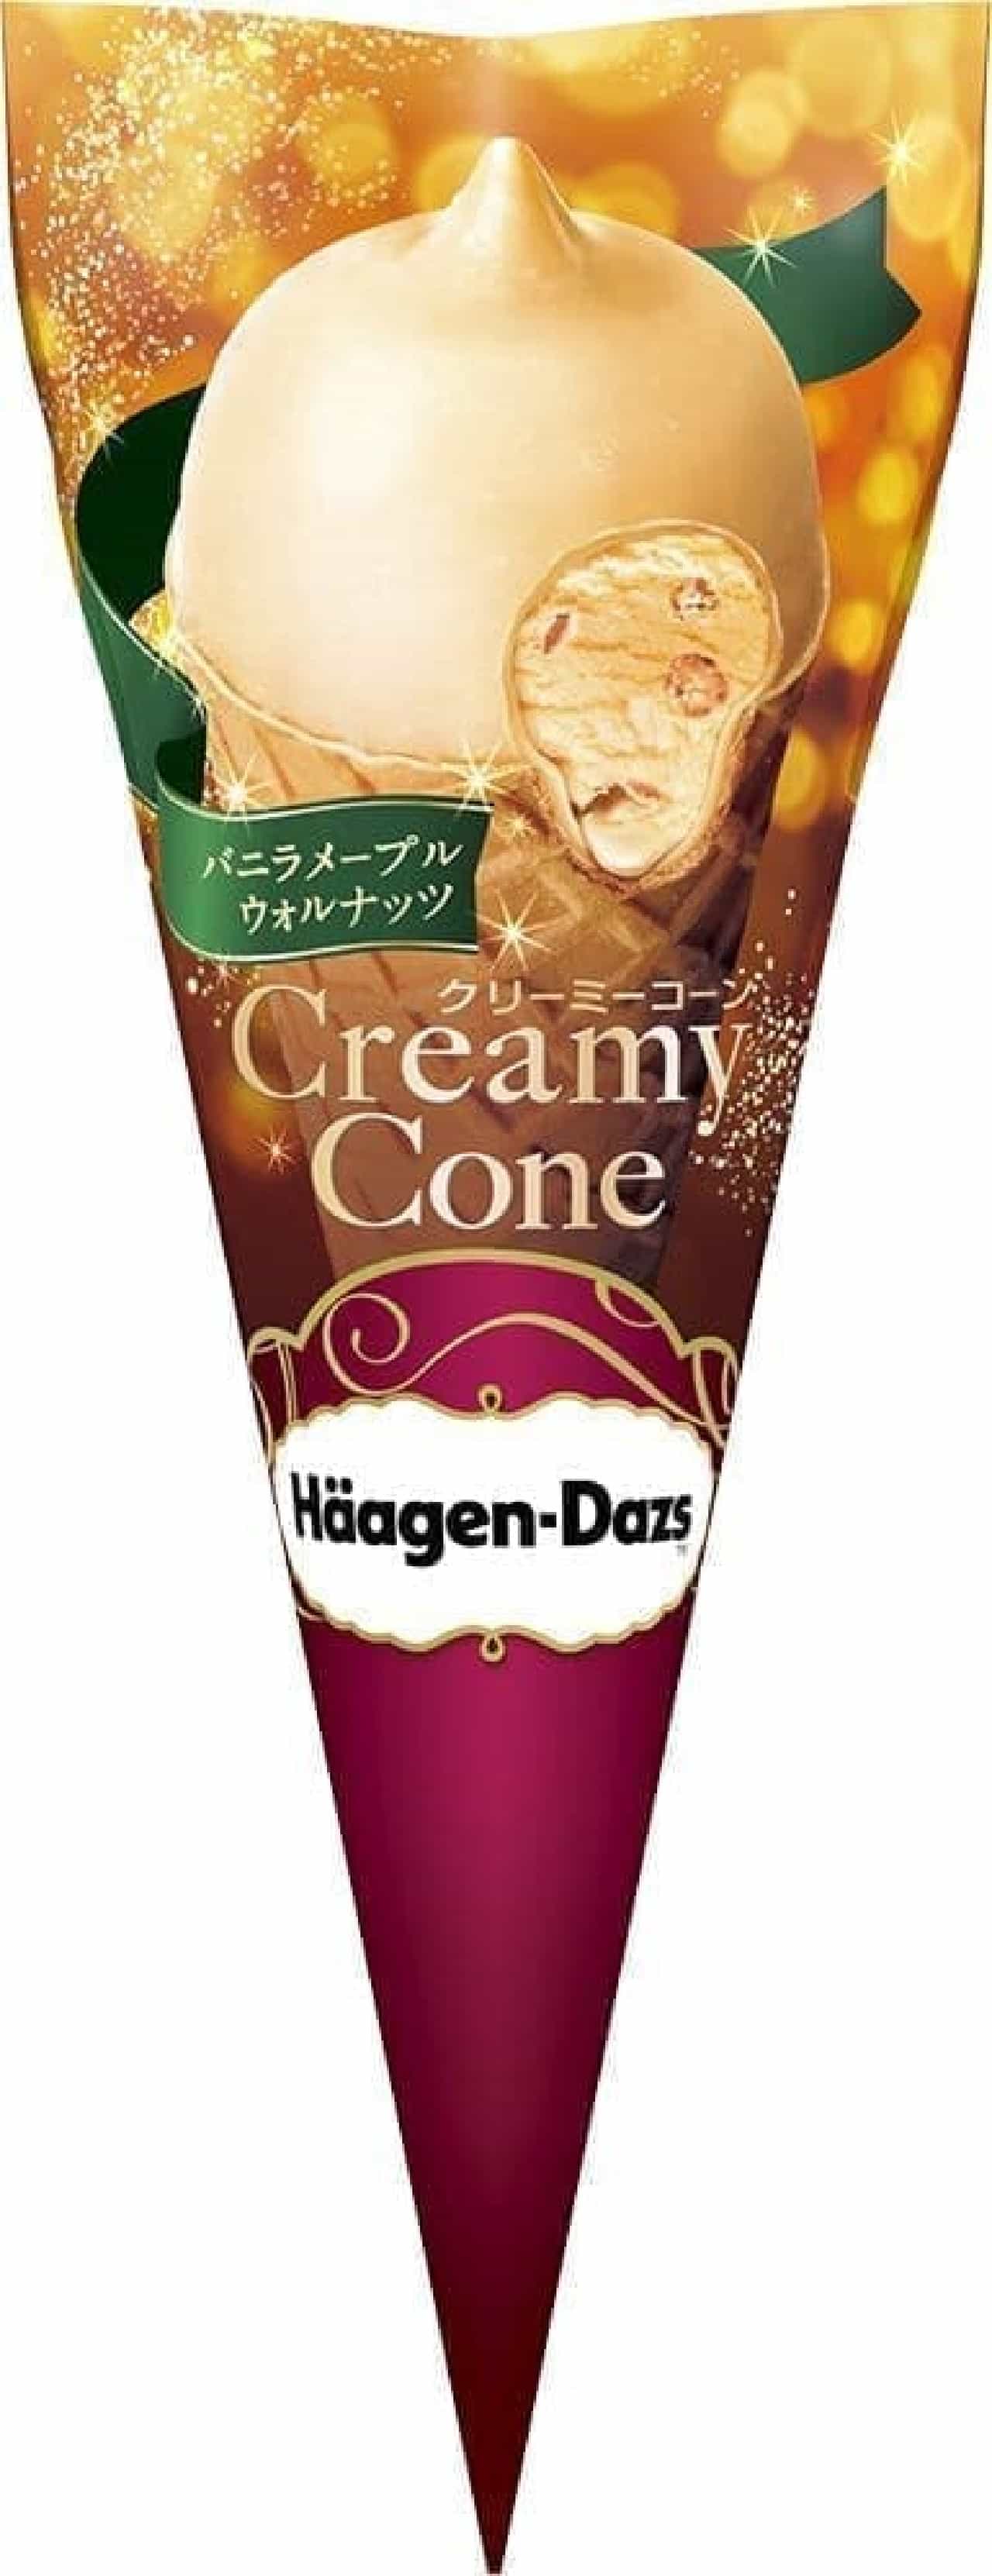 7-ELEVEN Limited Haagen-Dazs "Creamy Corn Vanilla Maple Walnuts"